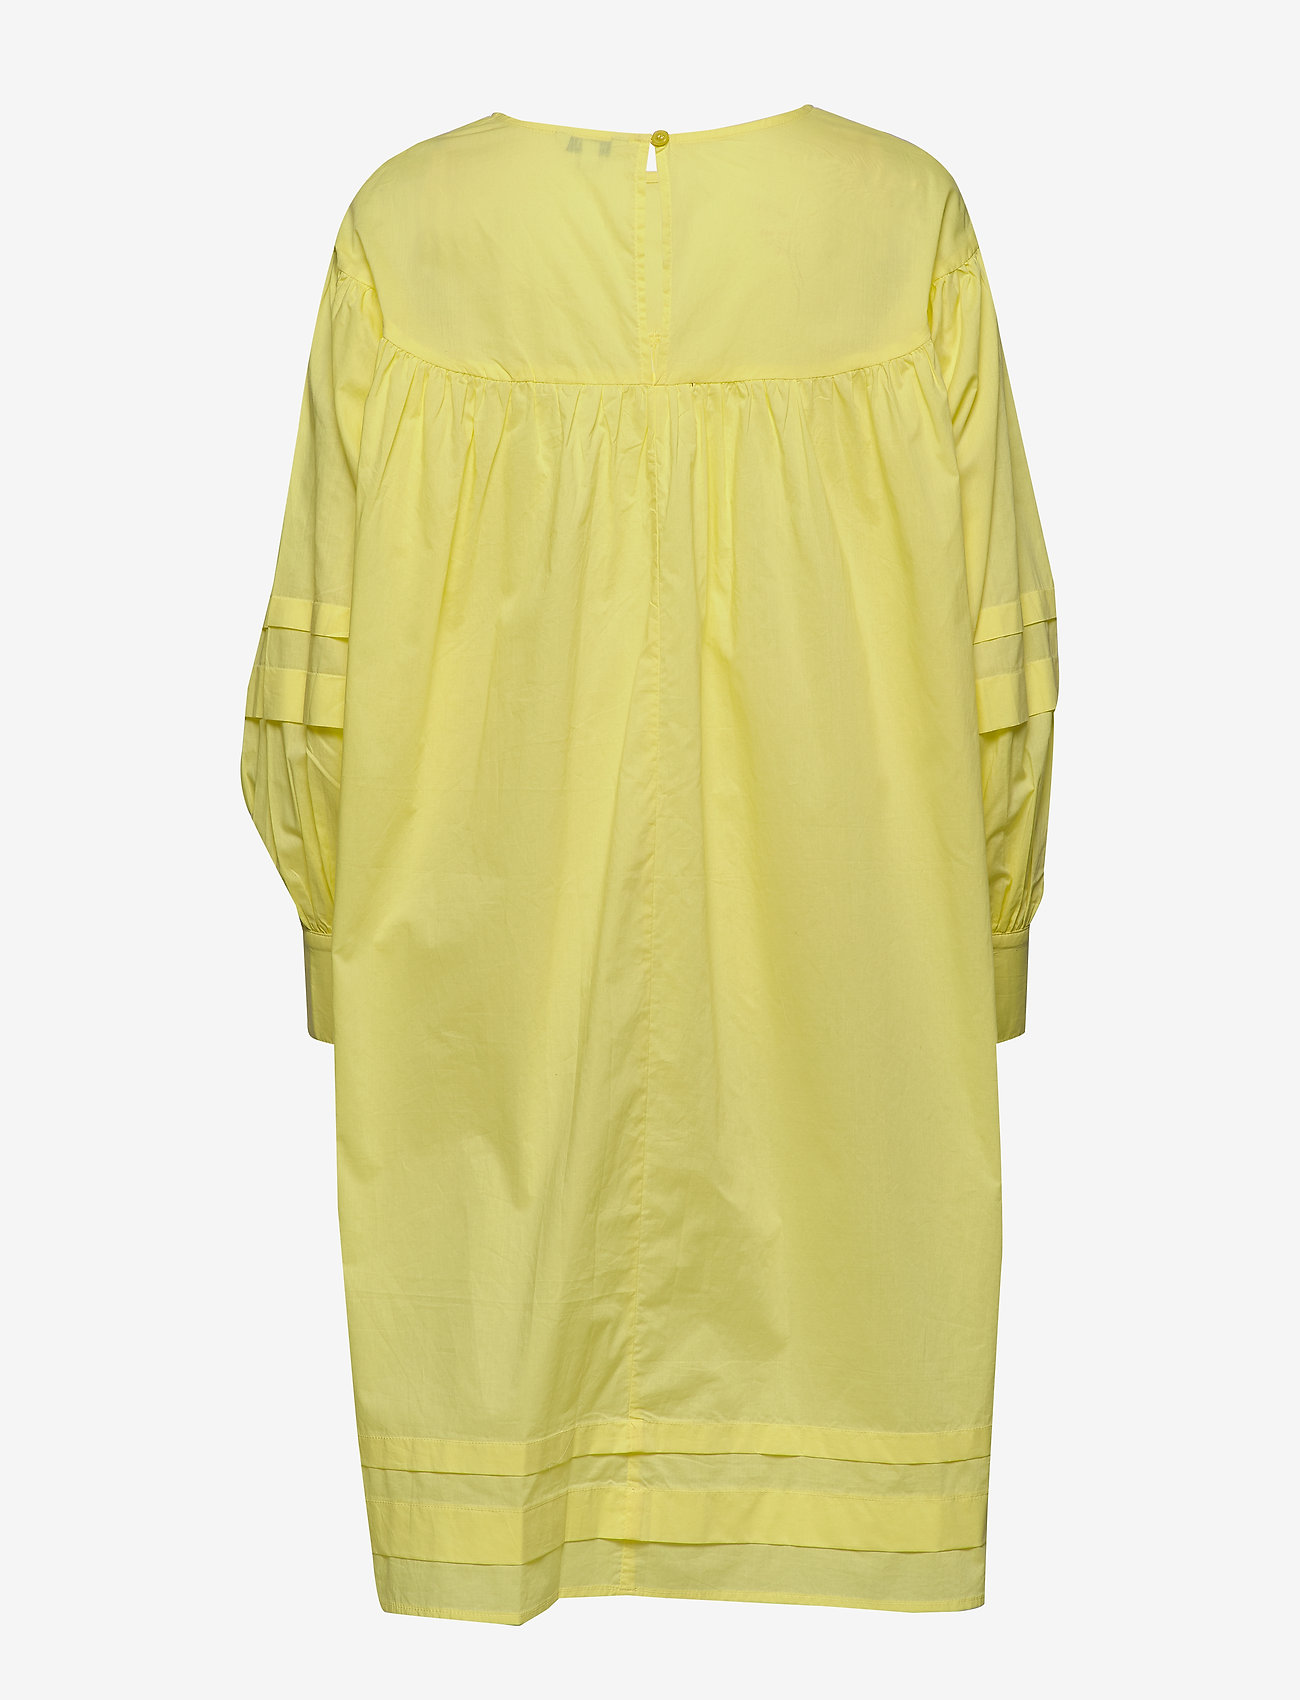 mbyM - Merwin - midi dresses - charlock yellow - 1